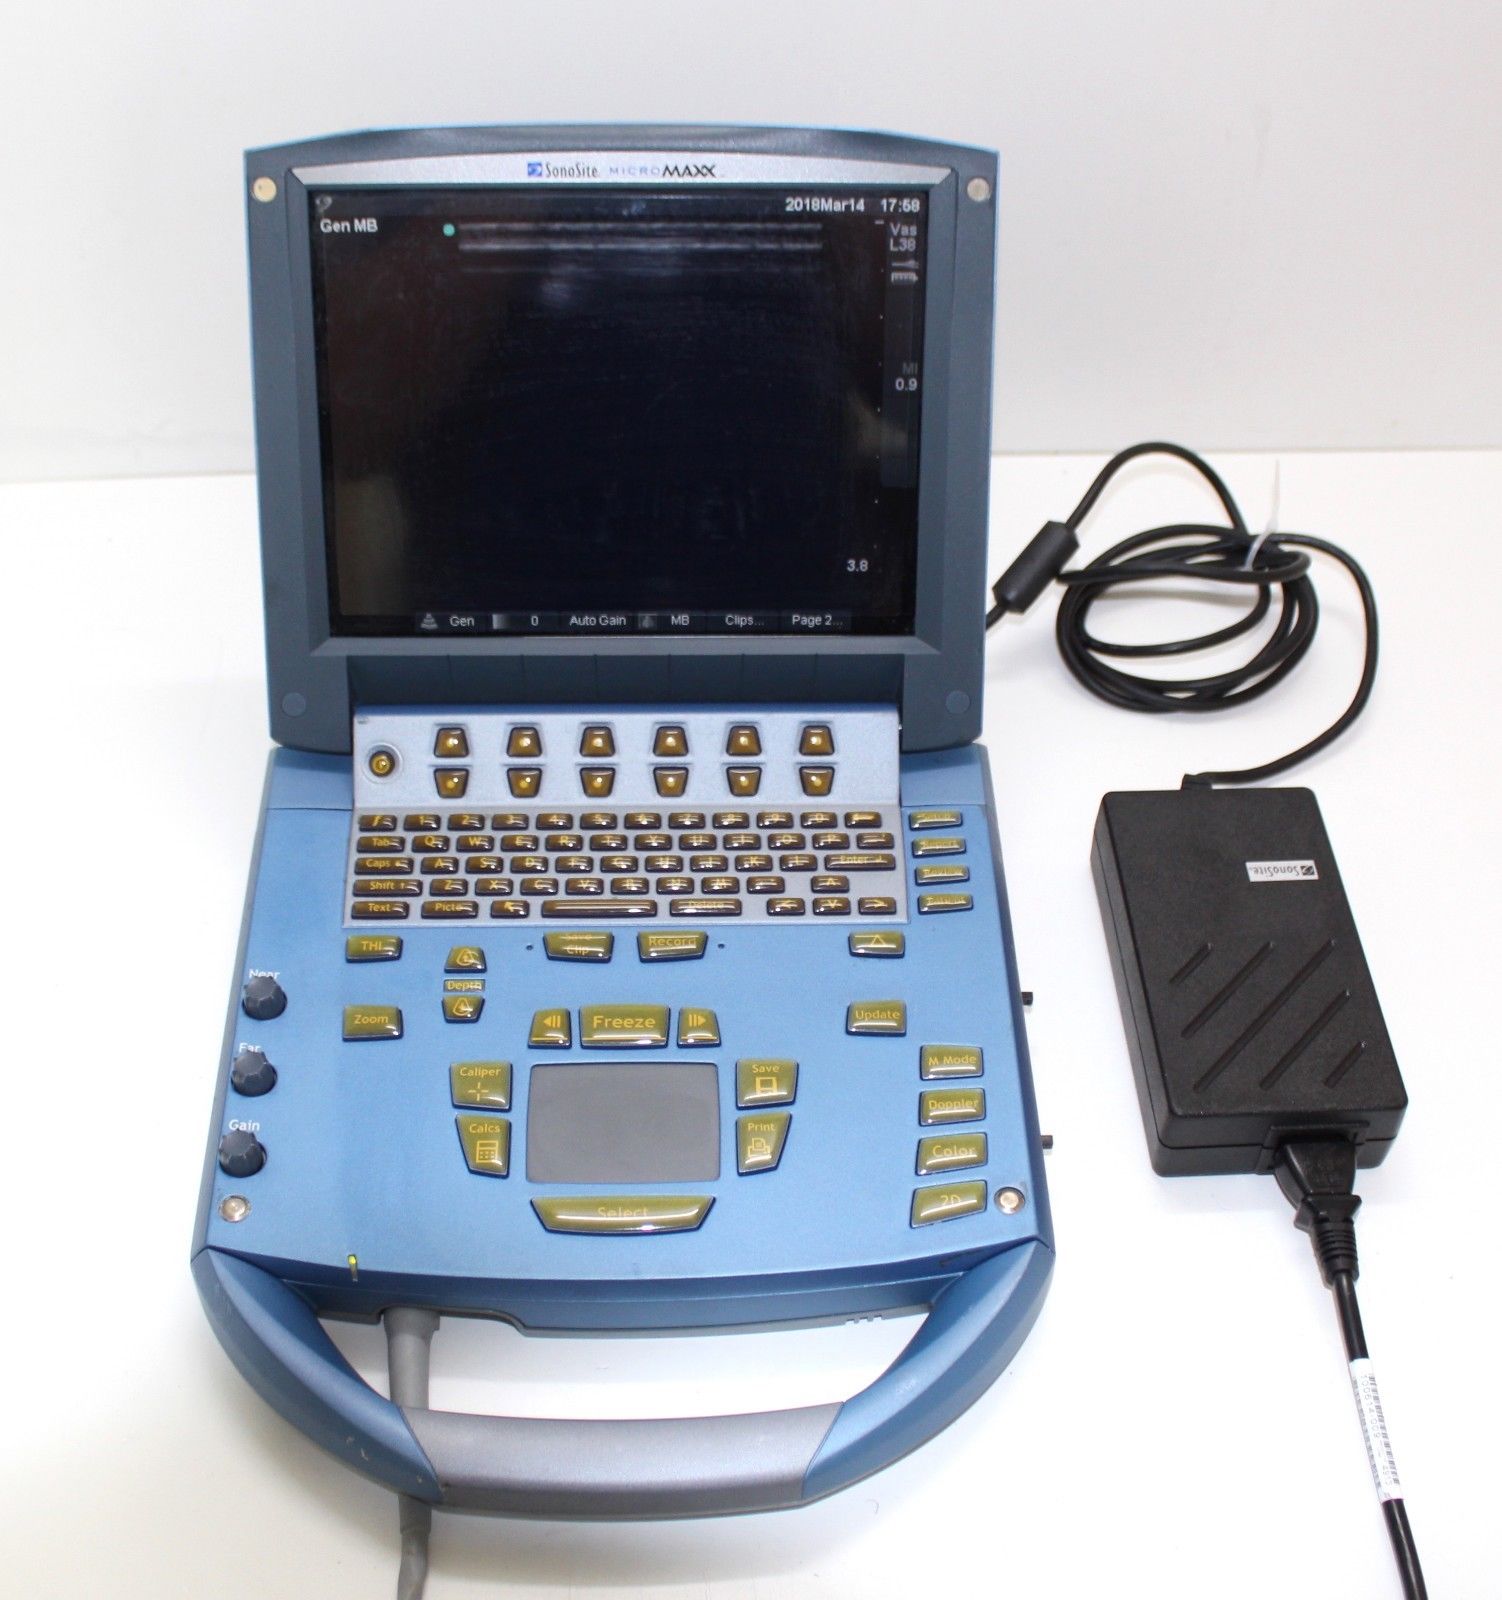 Sonosite Micromaxx Ultrasound ( please read) DIAGNOSTIC ULTRASOUND MACHINES FOR SALE